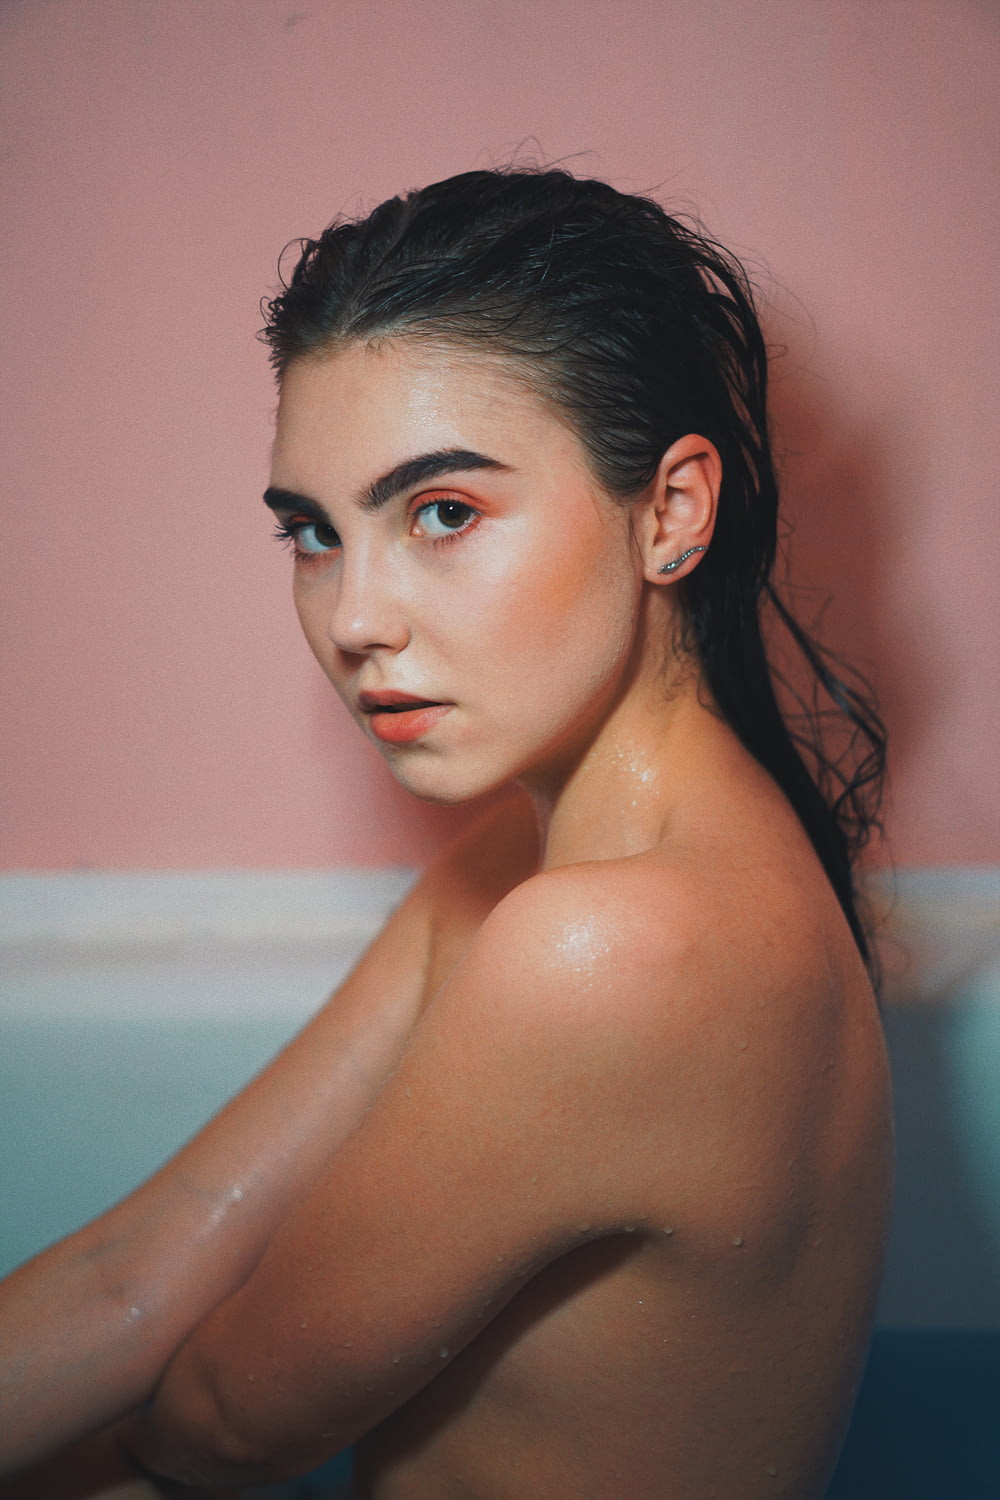 mulher de topless na banheira